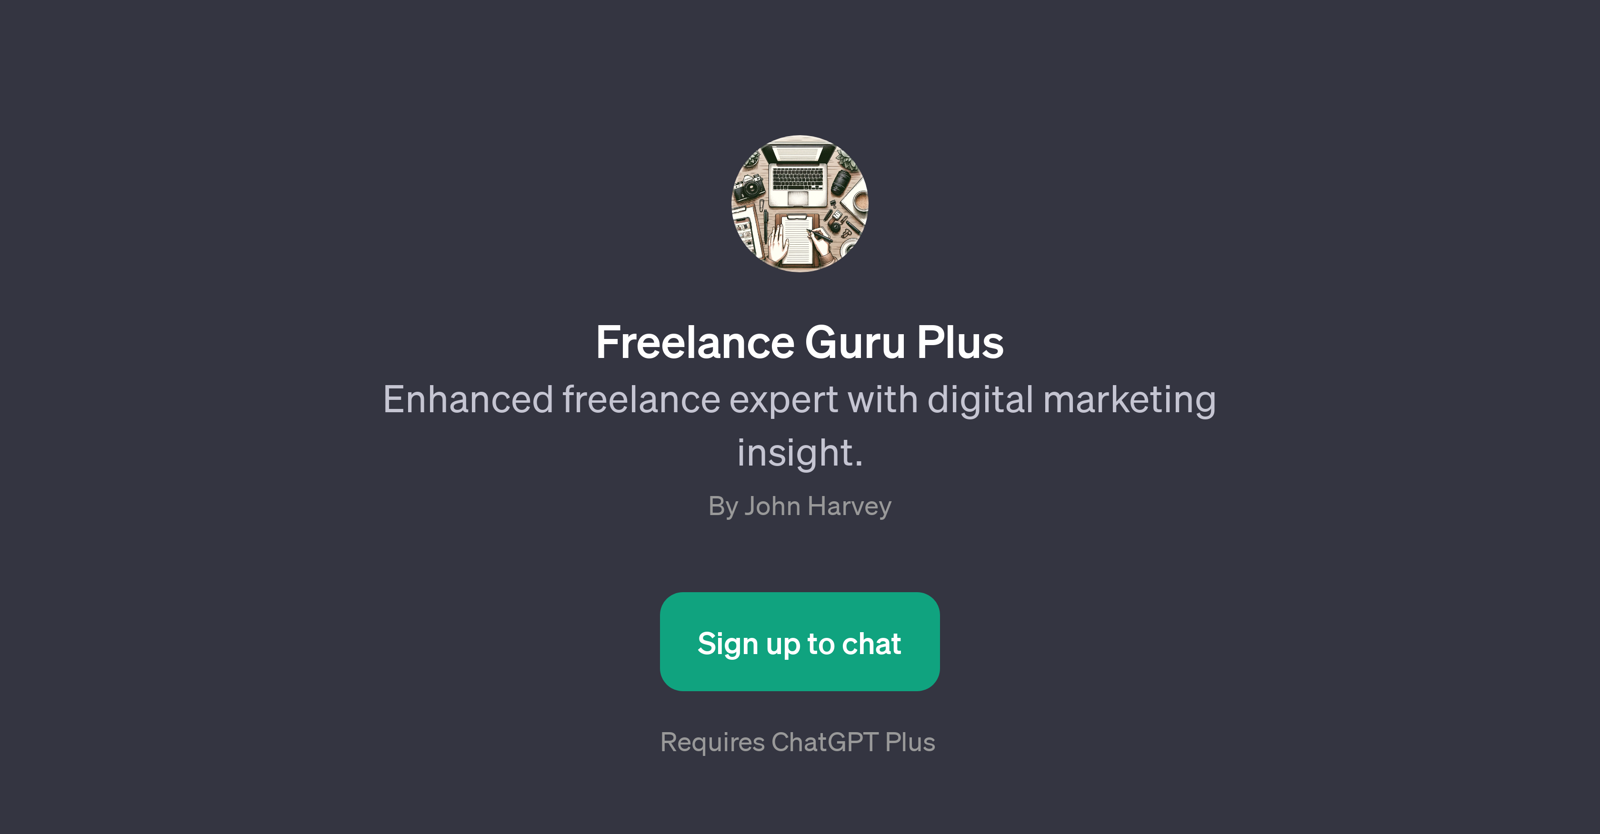 Freelance Guru Plus website